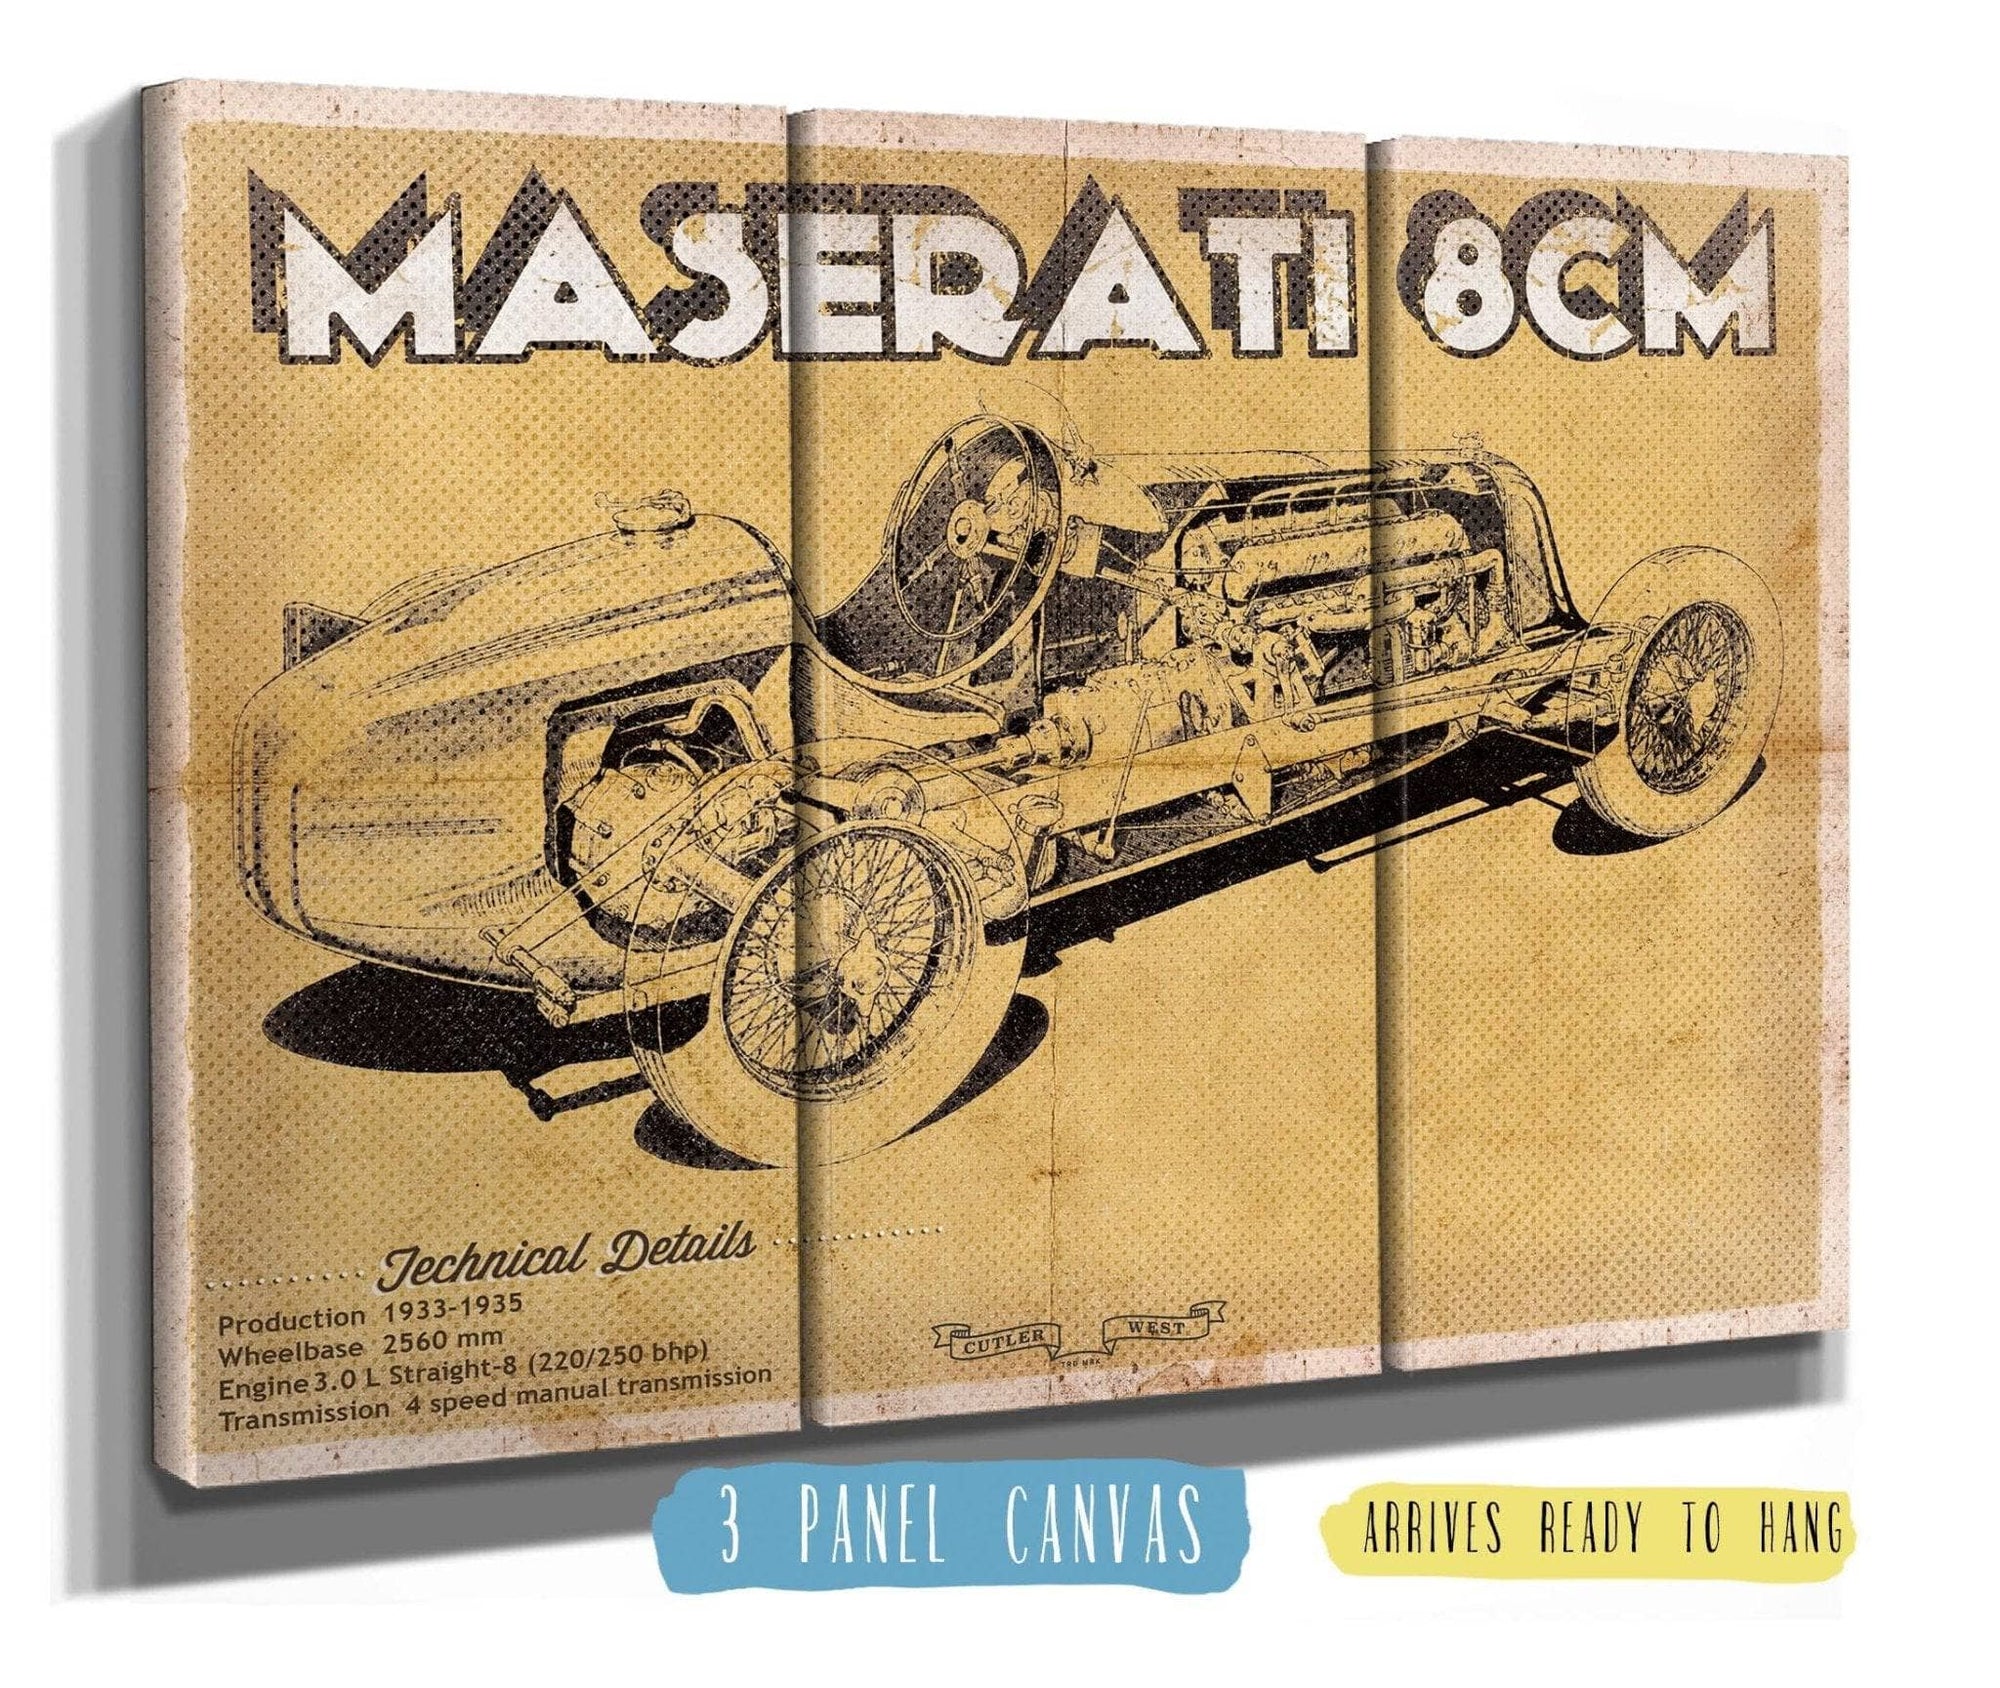 Cutler West Maserati 8CM Racing Sports Car Print